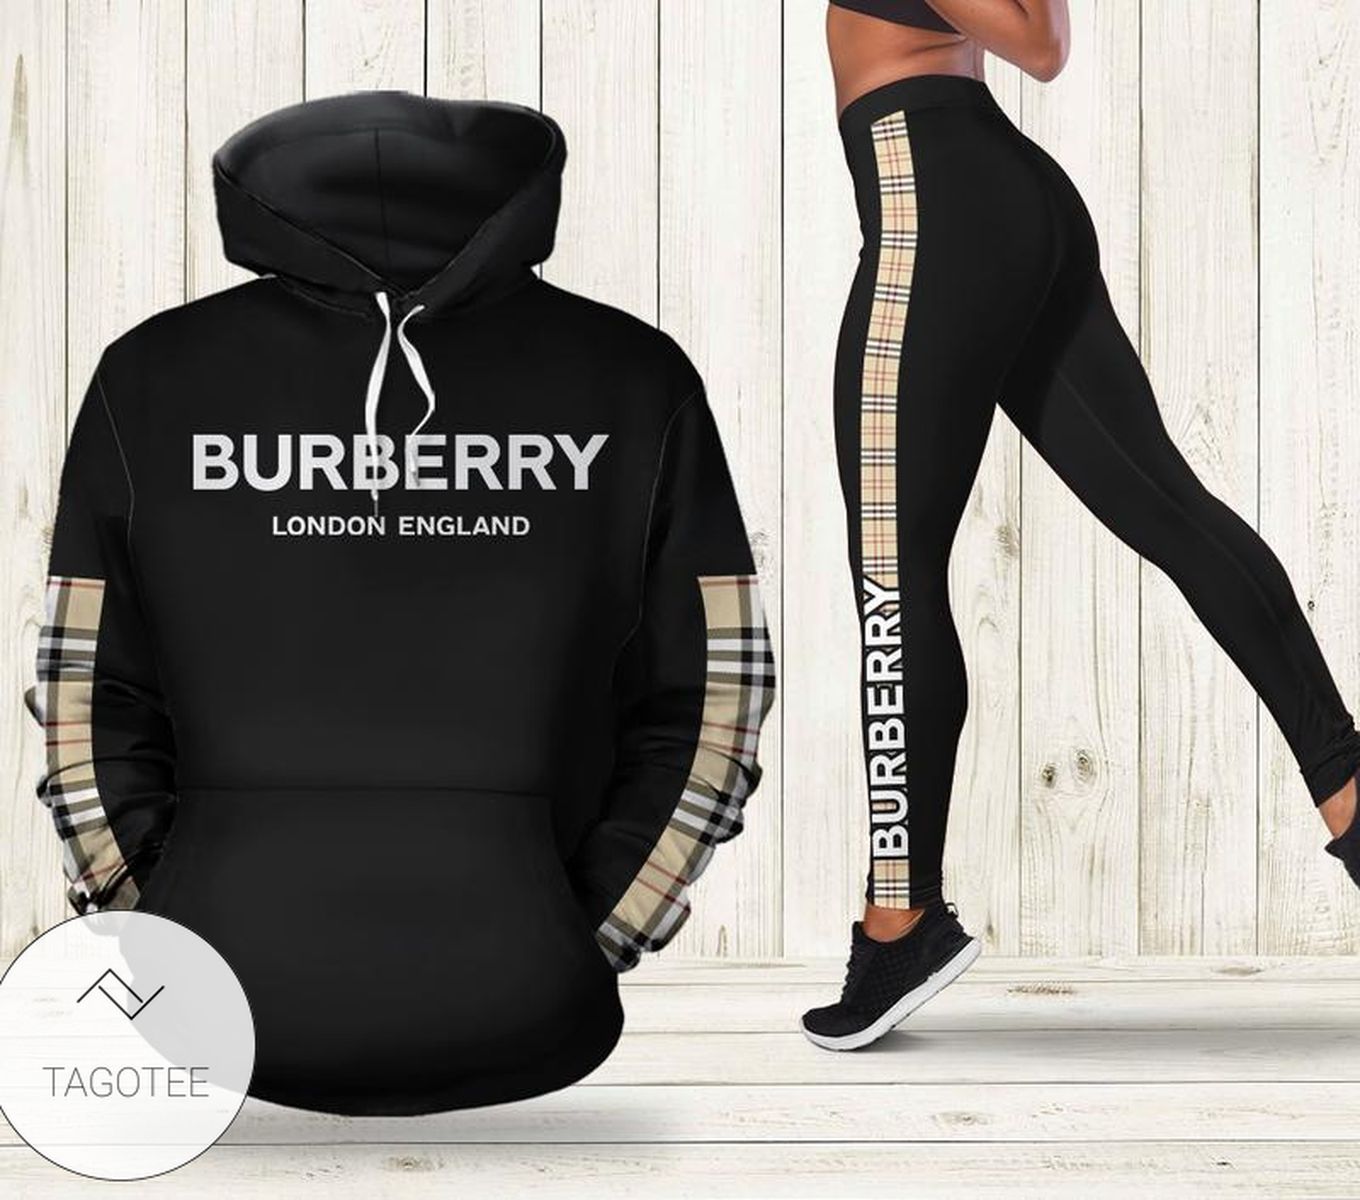 Burberry London England Black Hoodie And Leggings